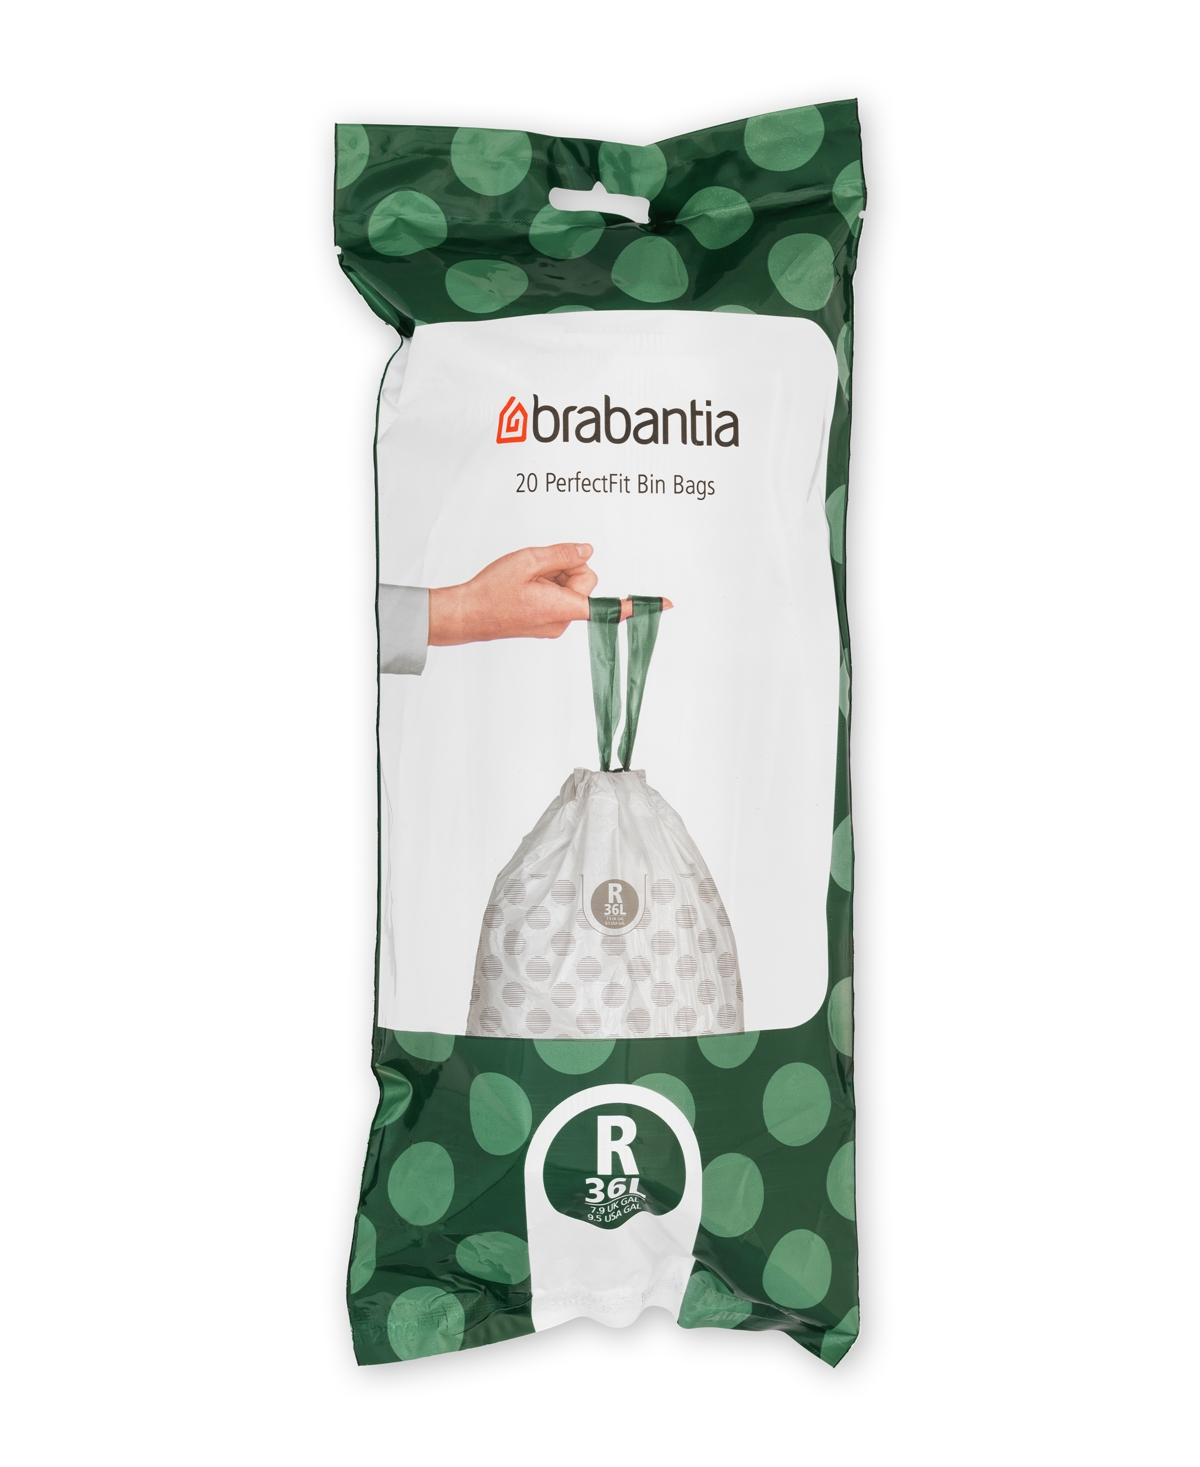 Brabantia Perfectfit Trash Bags, Code R, 9.5 Gallon, 36 Liter, 120 Trash Bags In White